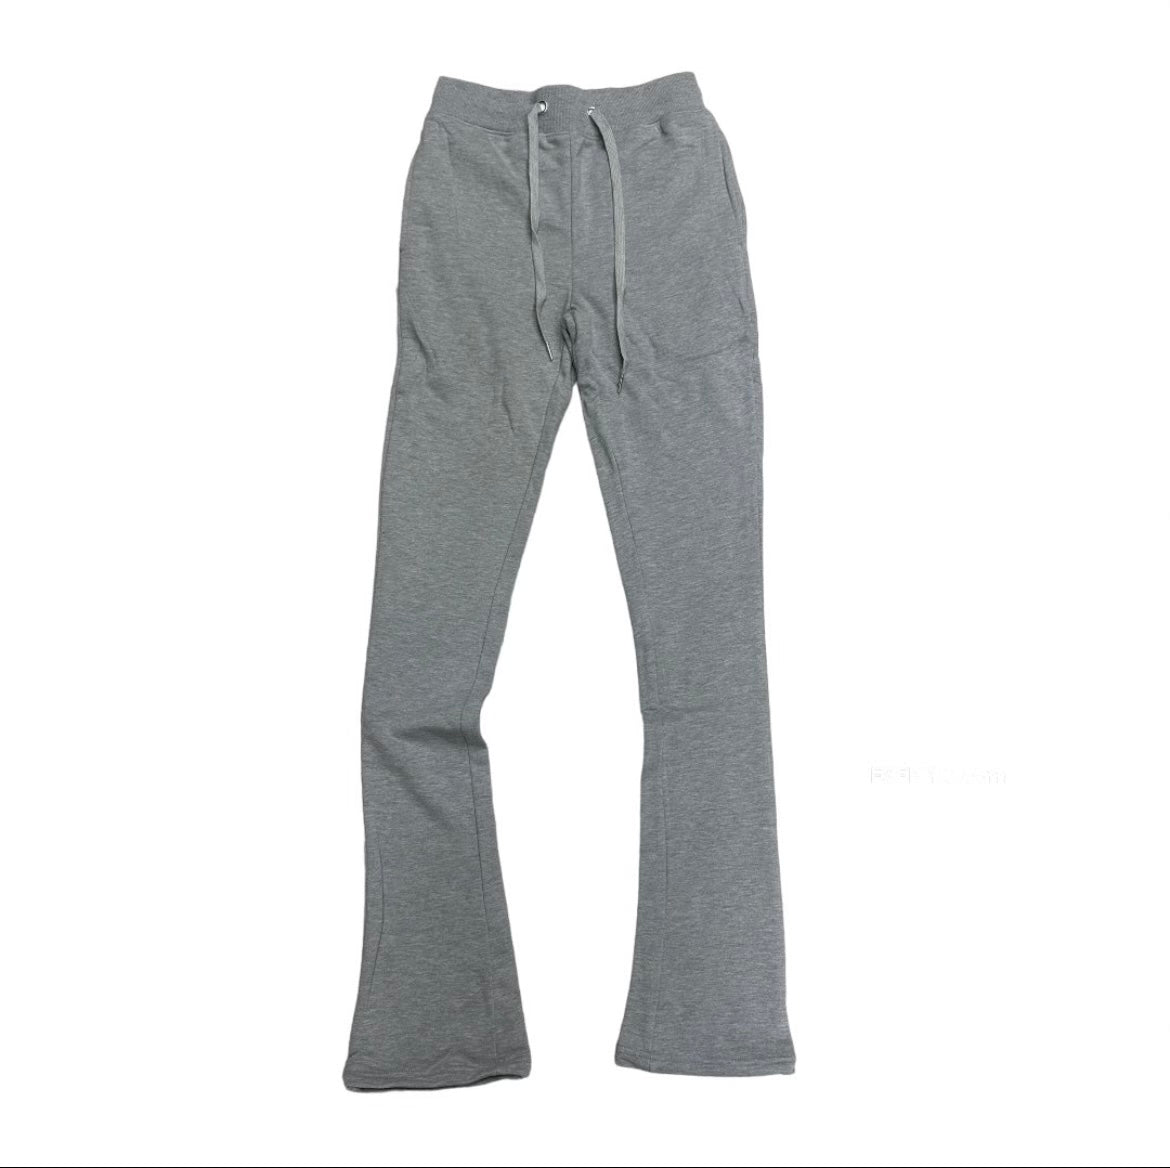 Evolution Gray Stack pants